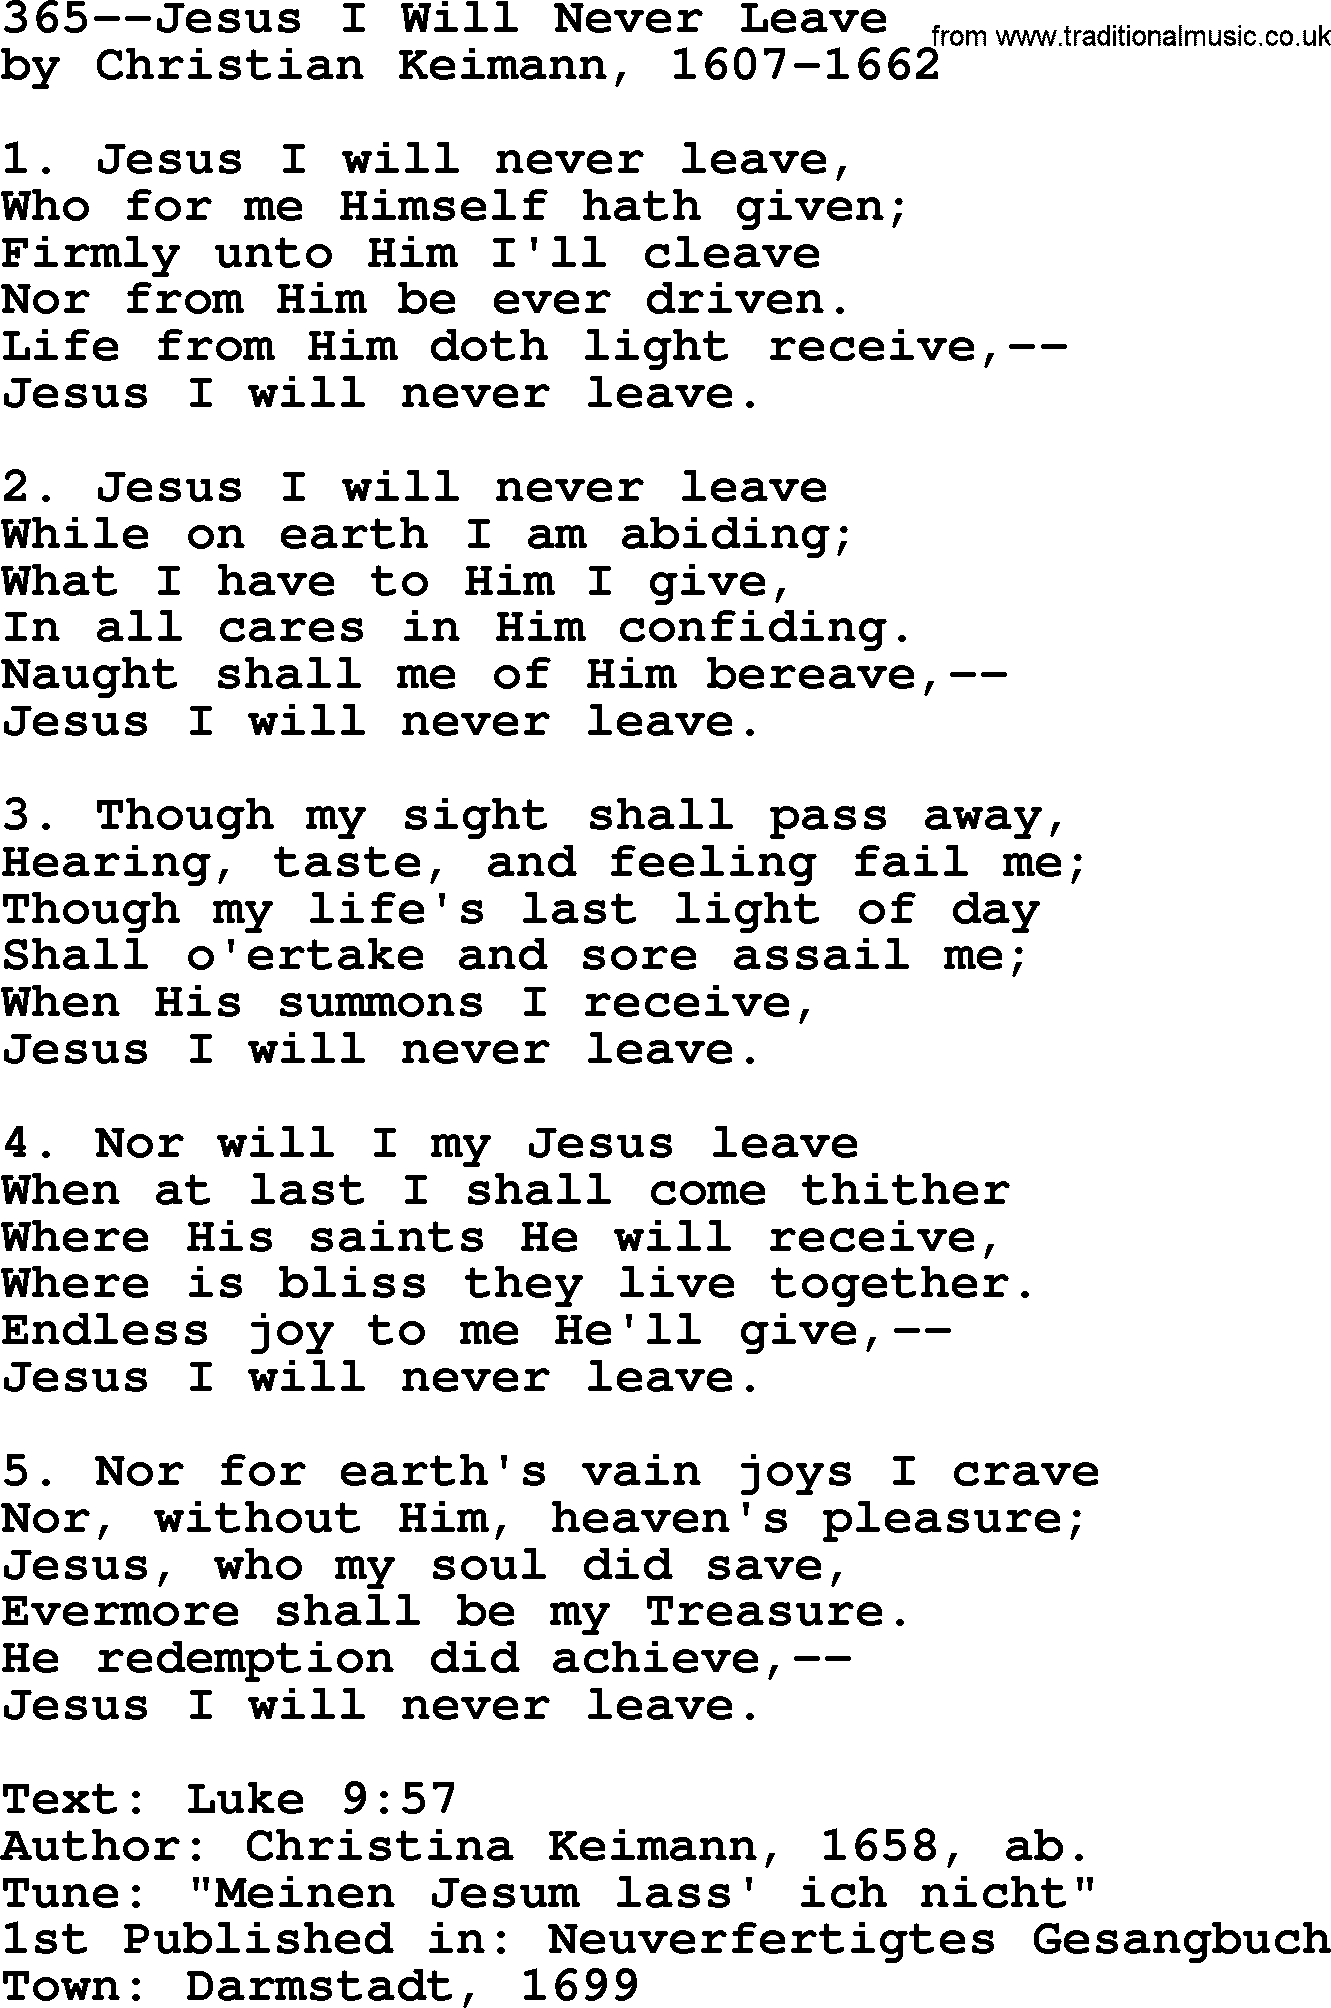 Lutheran Hymn: 365--Jesus I Will Never Leave.txt lyrics with PDF